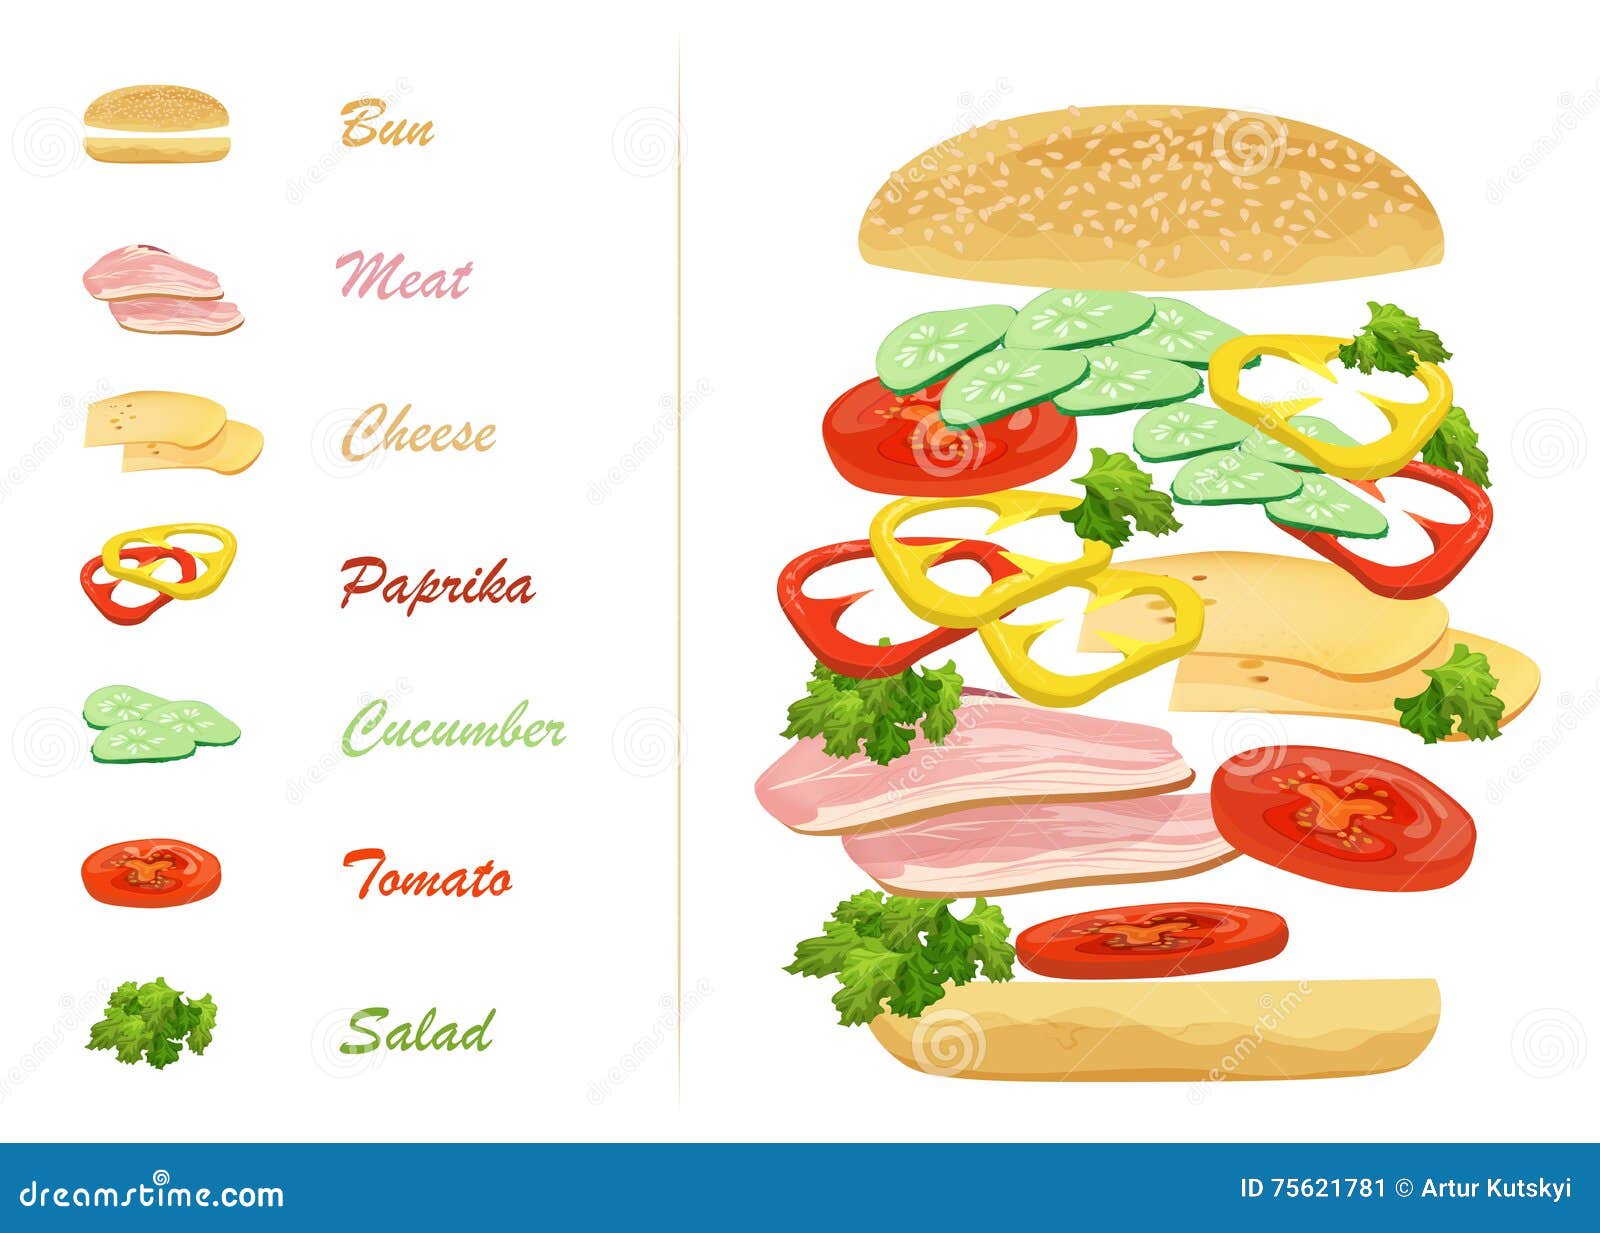 Как будет по английски бутерброд. Рисунок ингредиентов для бутерброда. Ингредиенты для бутерброда. Ингредиенты для бургера. Ингредиенты для бутерброда мультяшные.